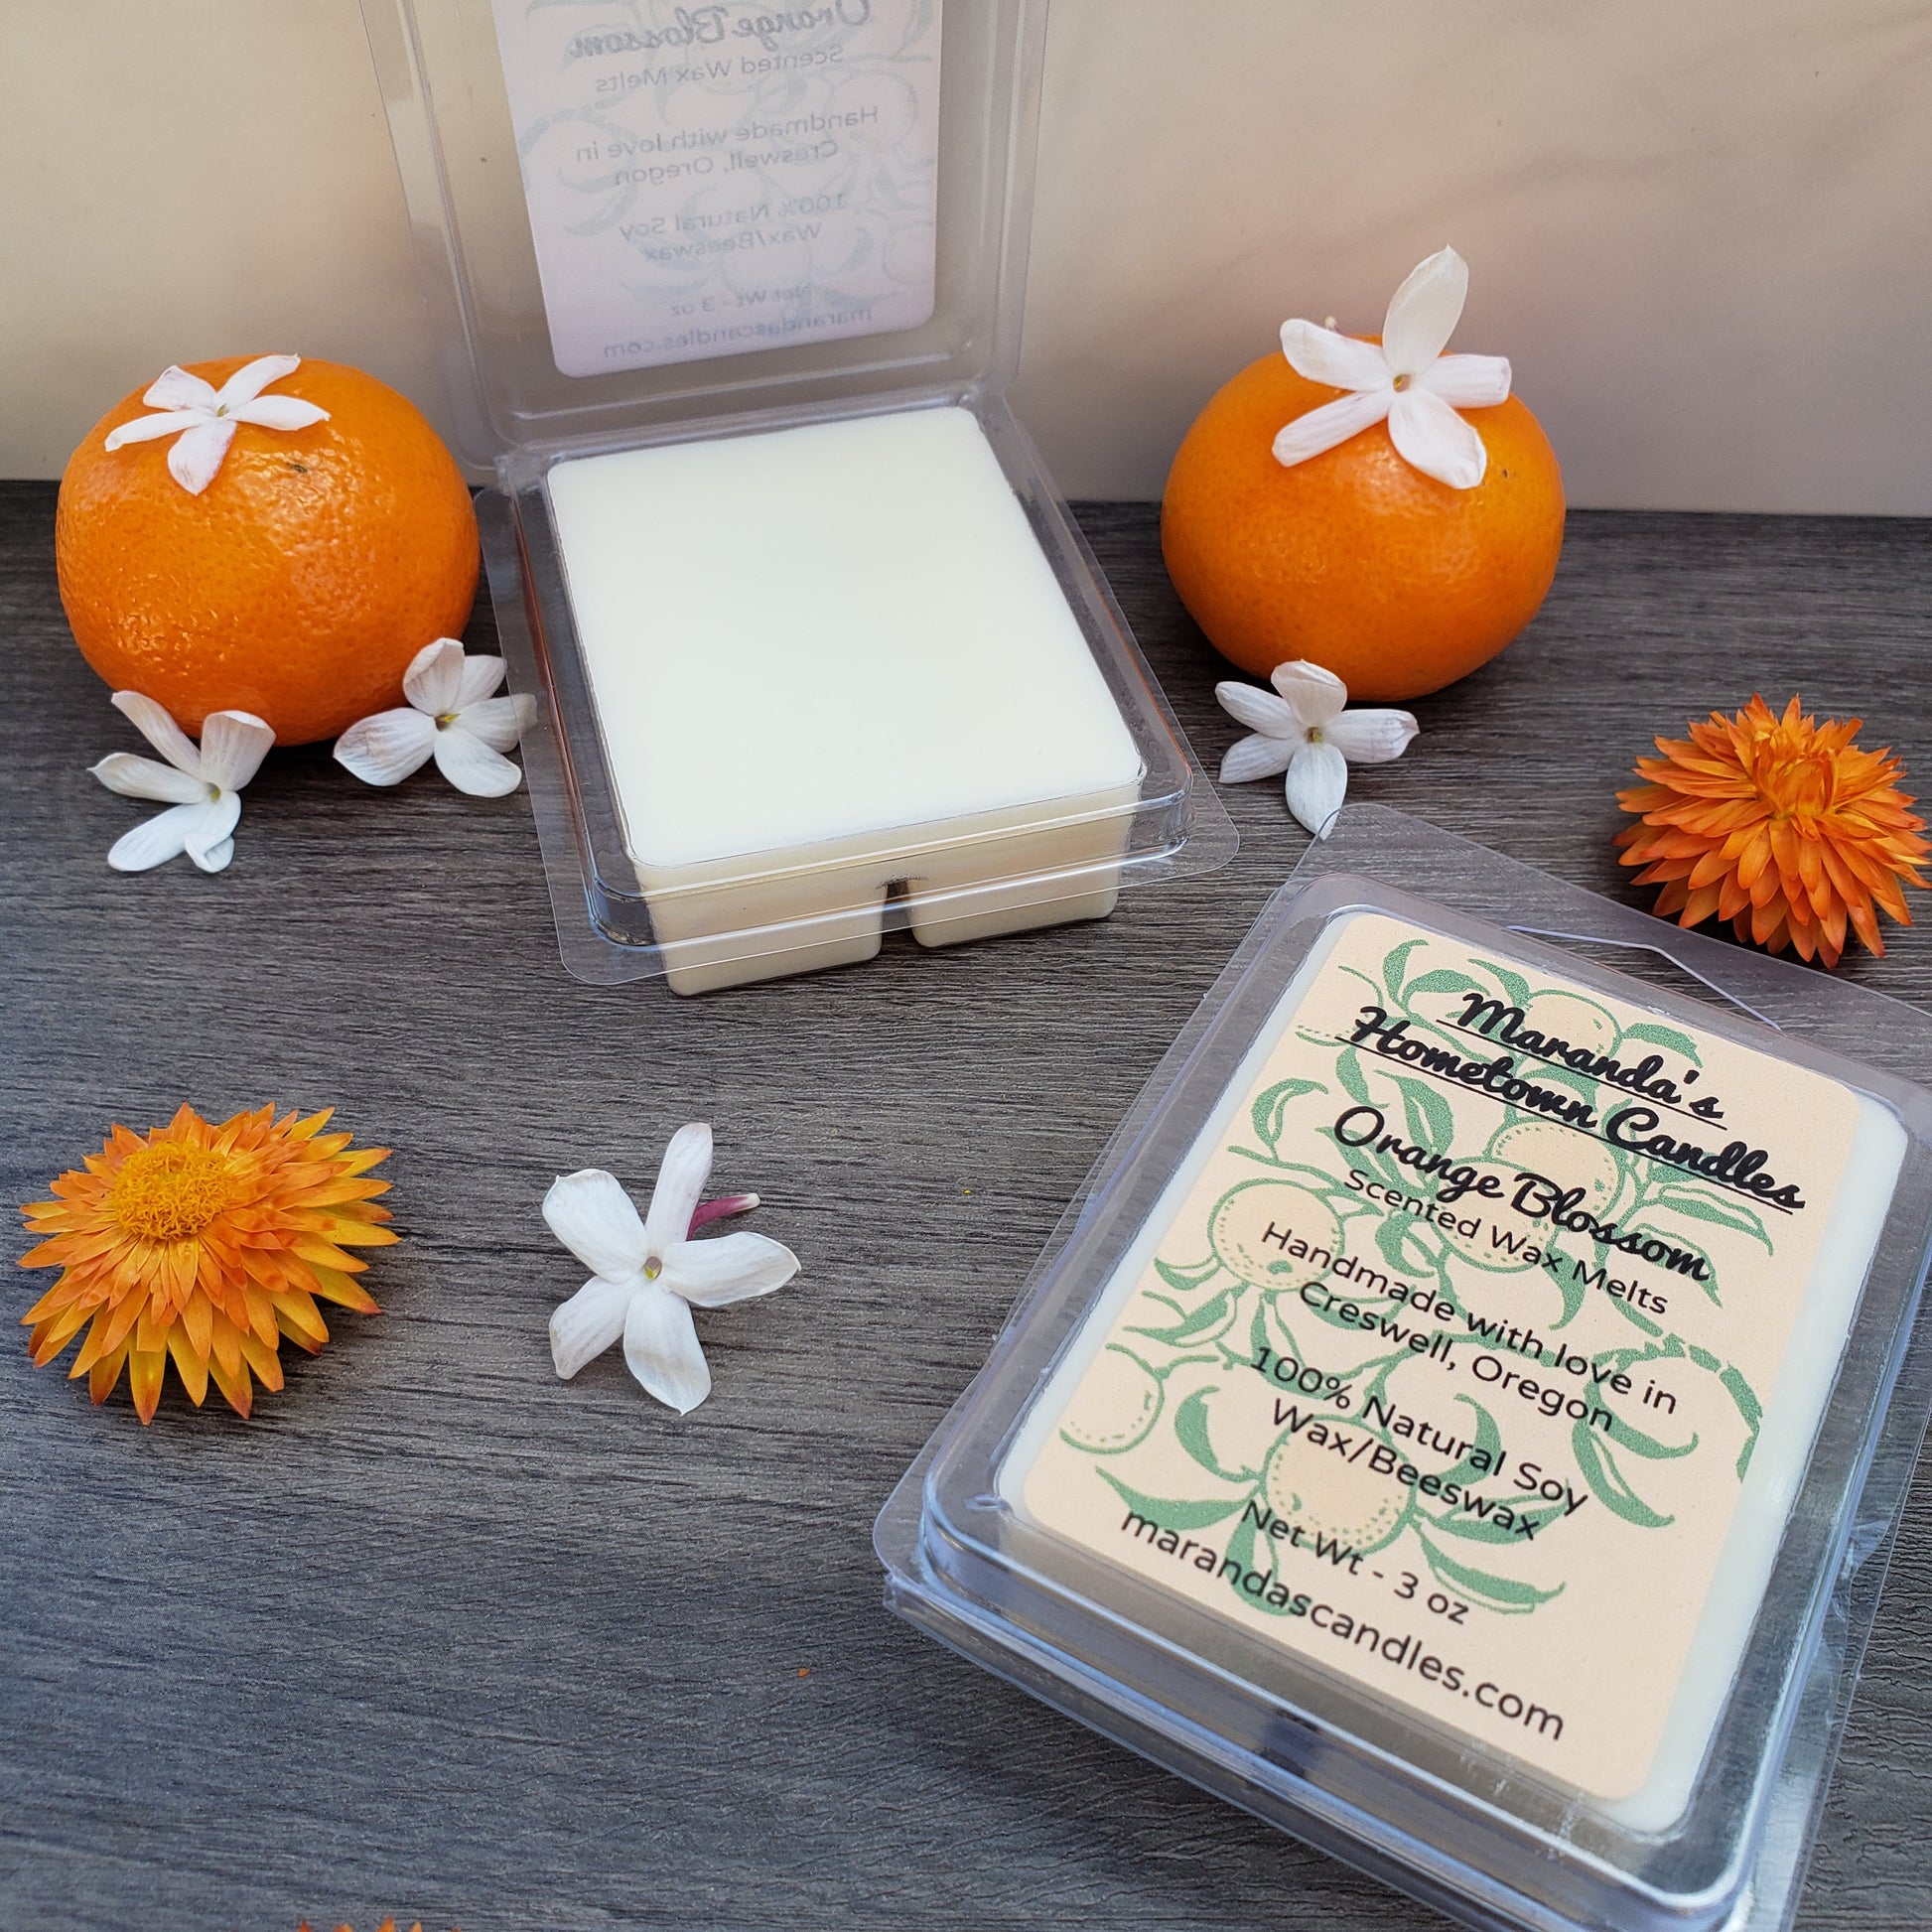 Orange Blossom Scented Soy Wax Candles and Wax Melts – Maranda's